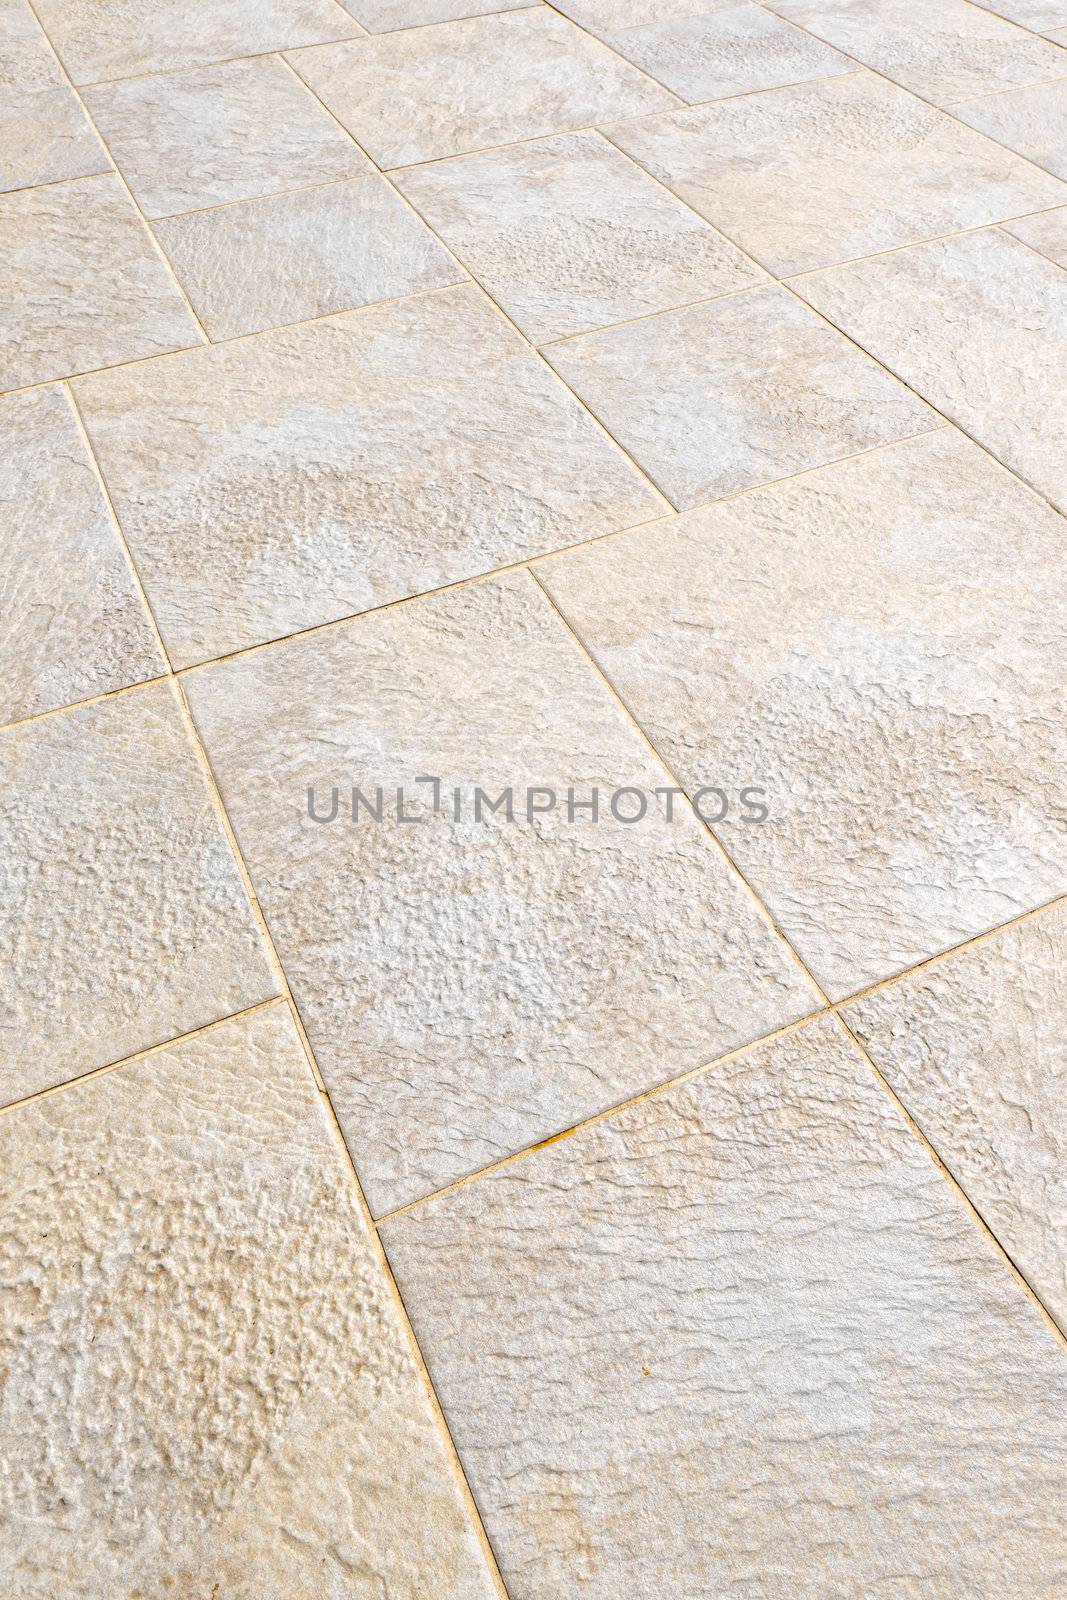 Tiled floor by elenathewise